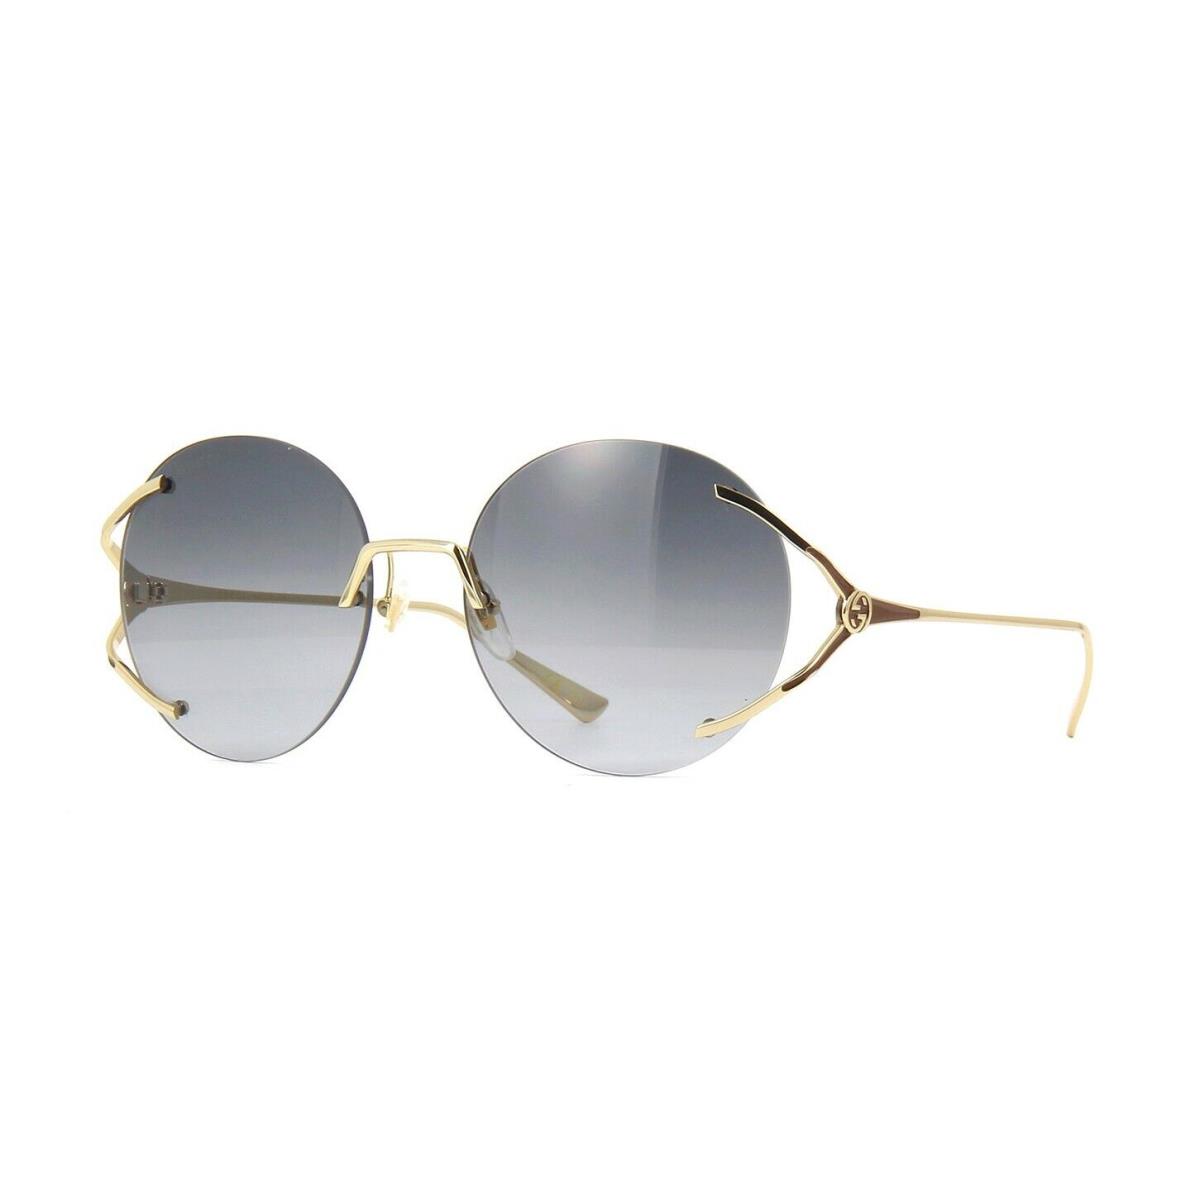 Gucci sunglasses  - Gold Frame, Grey Gradient Lens